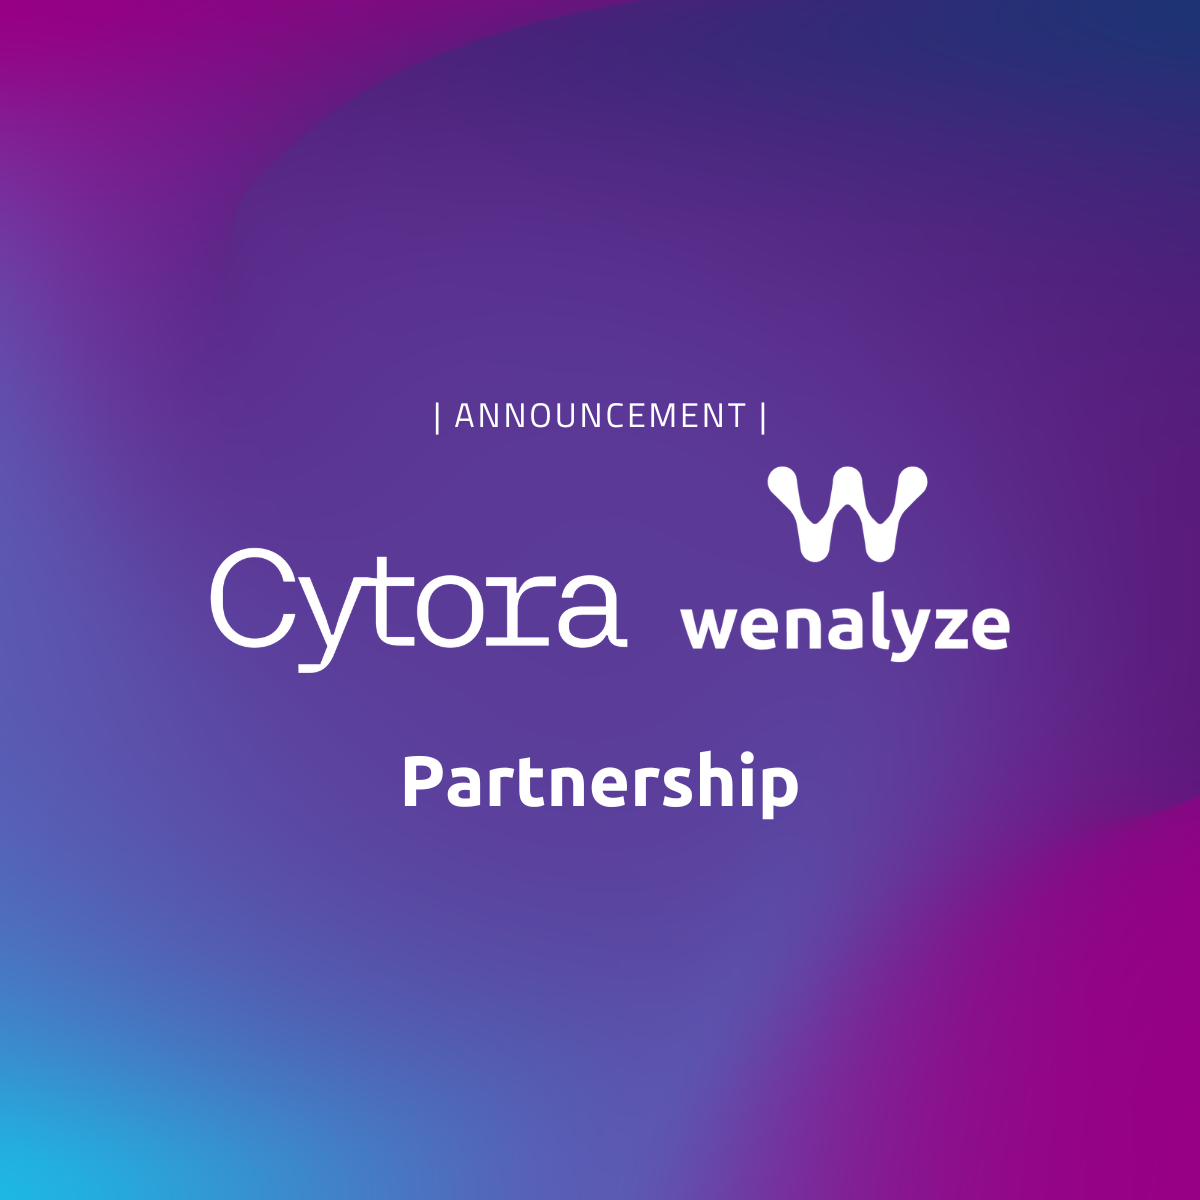 Partnership-between-Cytora-and-Wenalyze